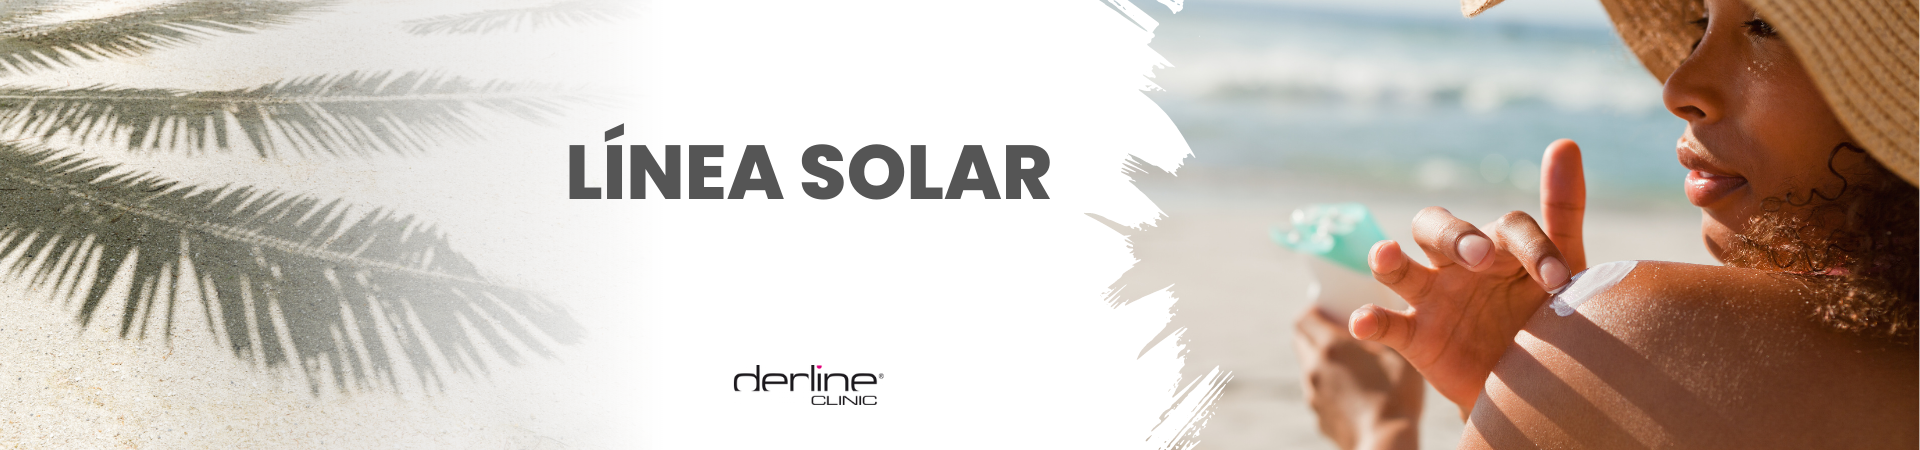 banner_linea_solar.png